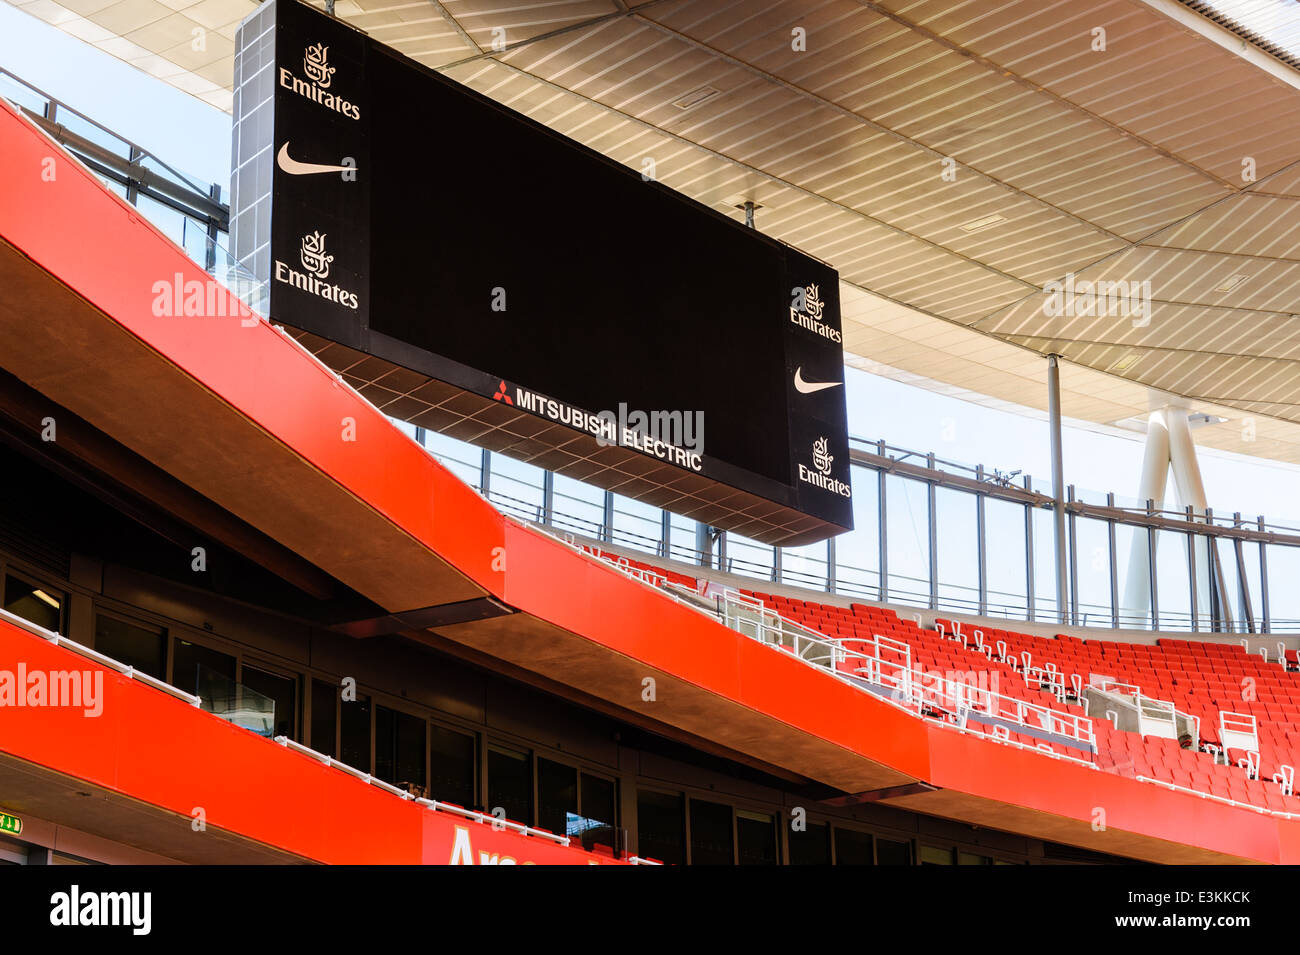 Mitsubishi Electric scoreboard at The Emirates Stadium, Arsenal Football Club Stock Photo